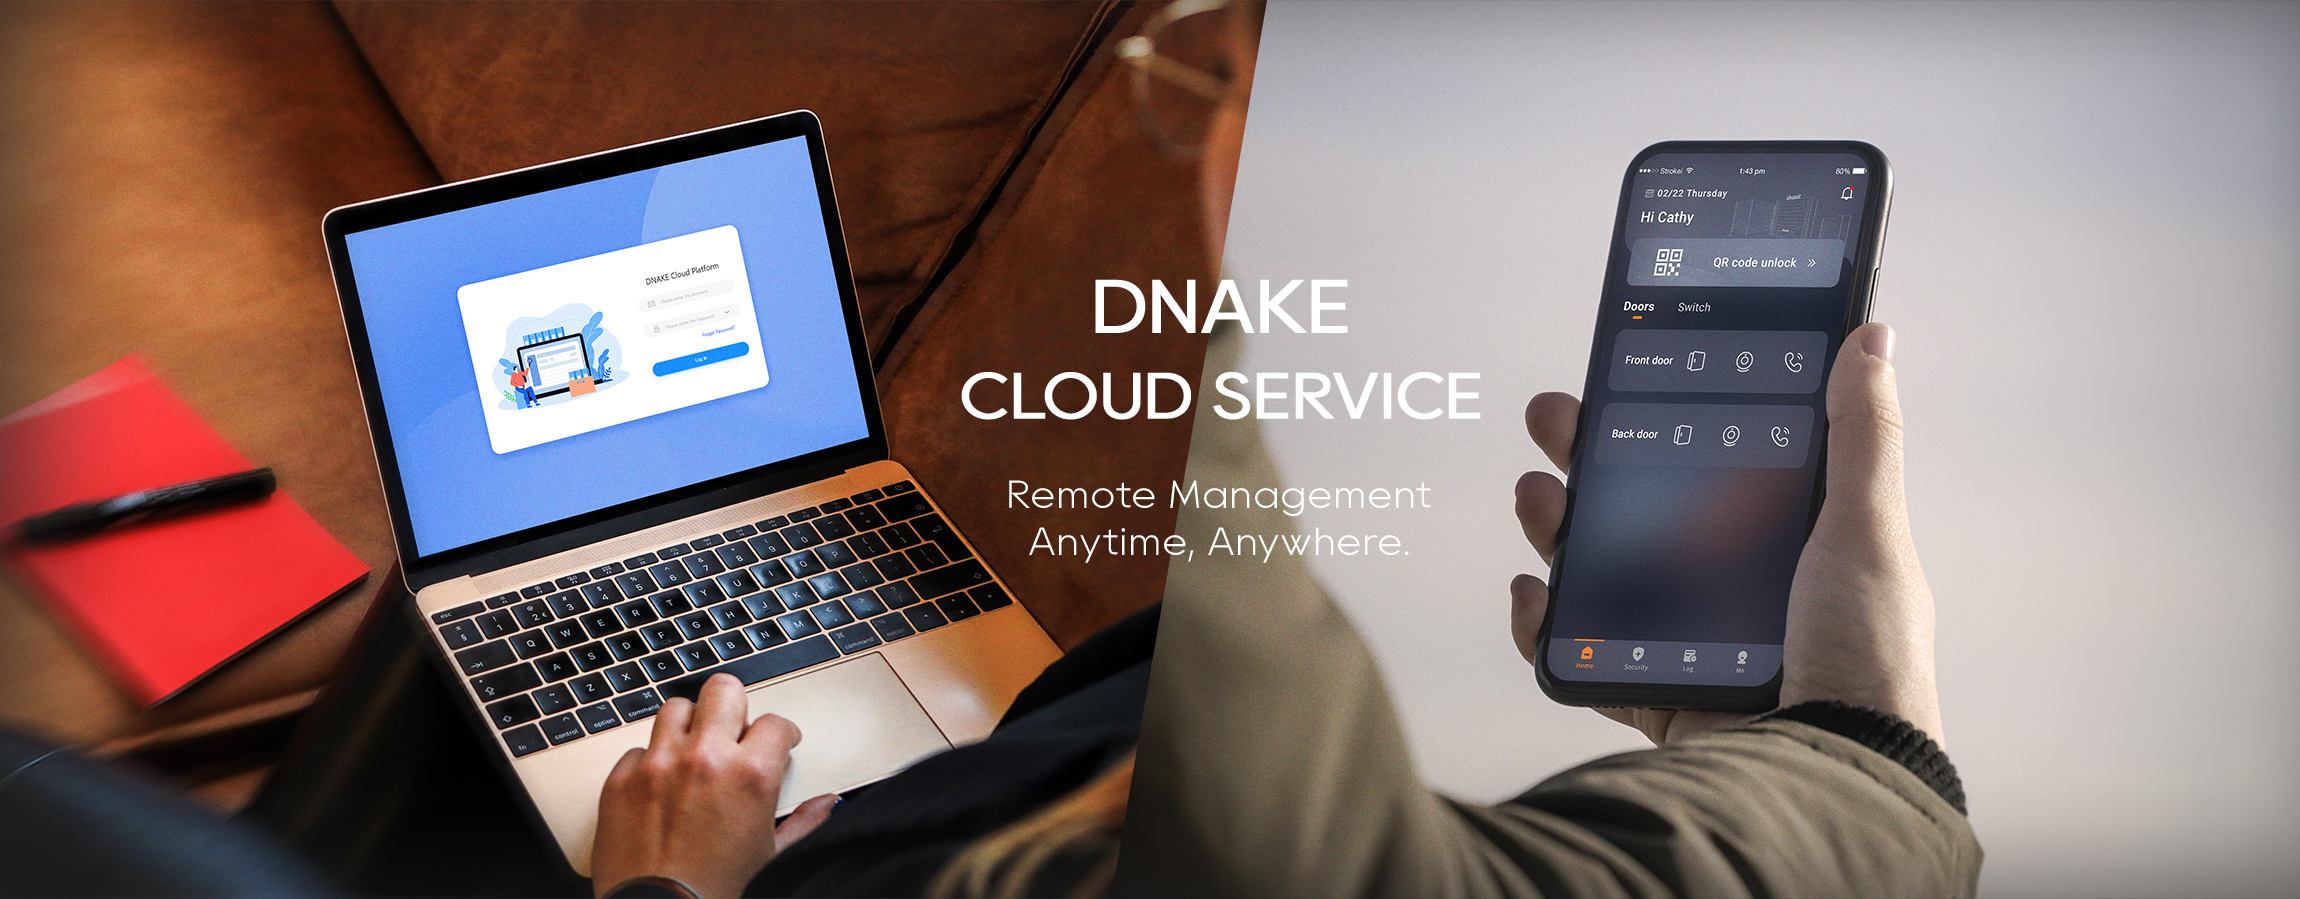 https://www.dnake-global.com/cloud-service/